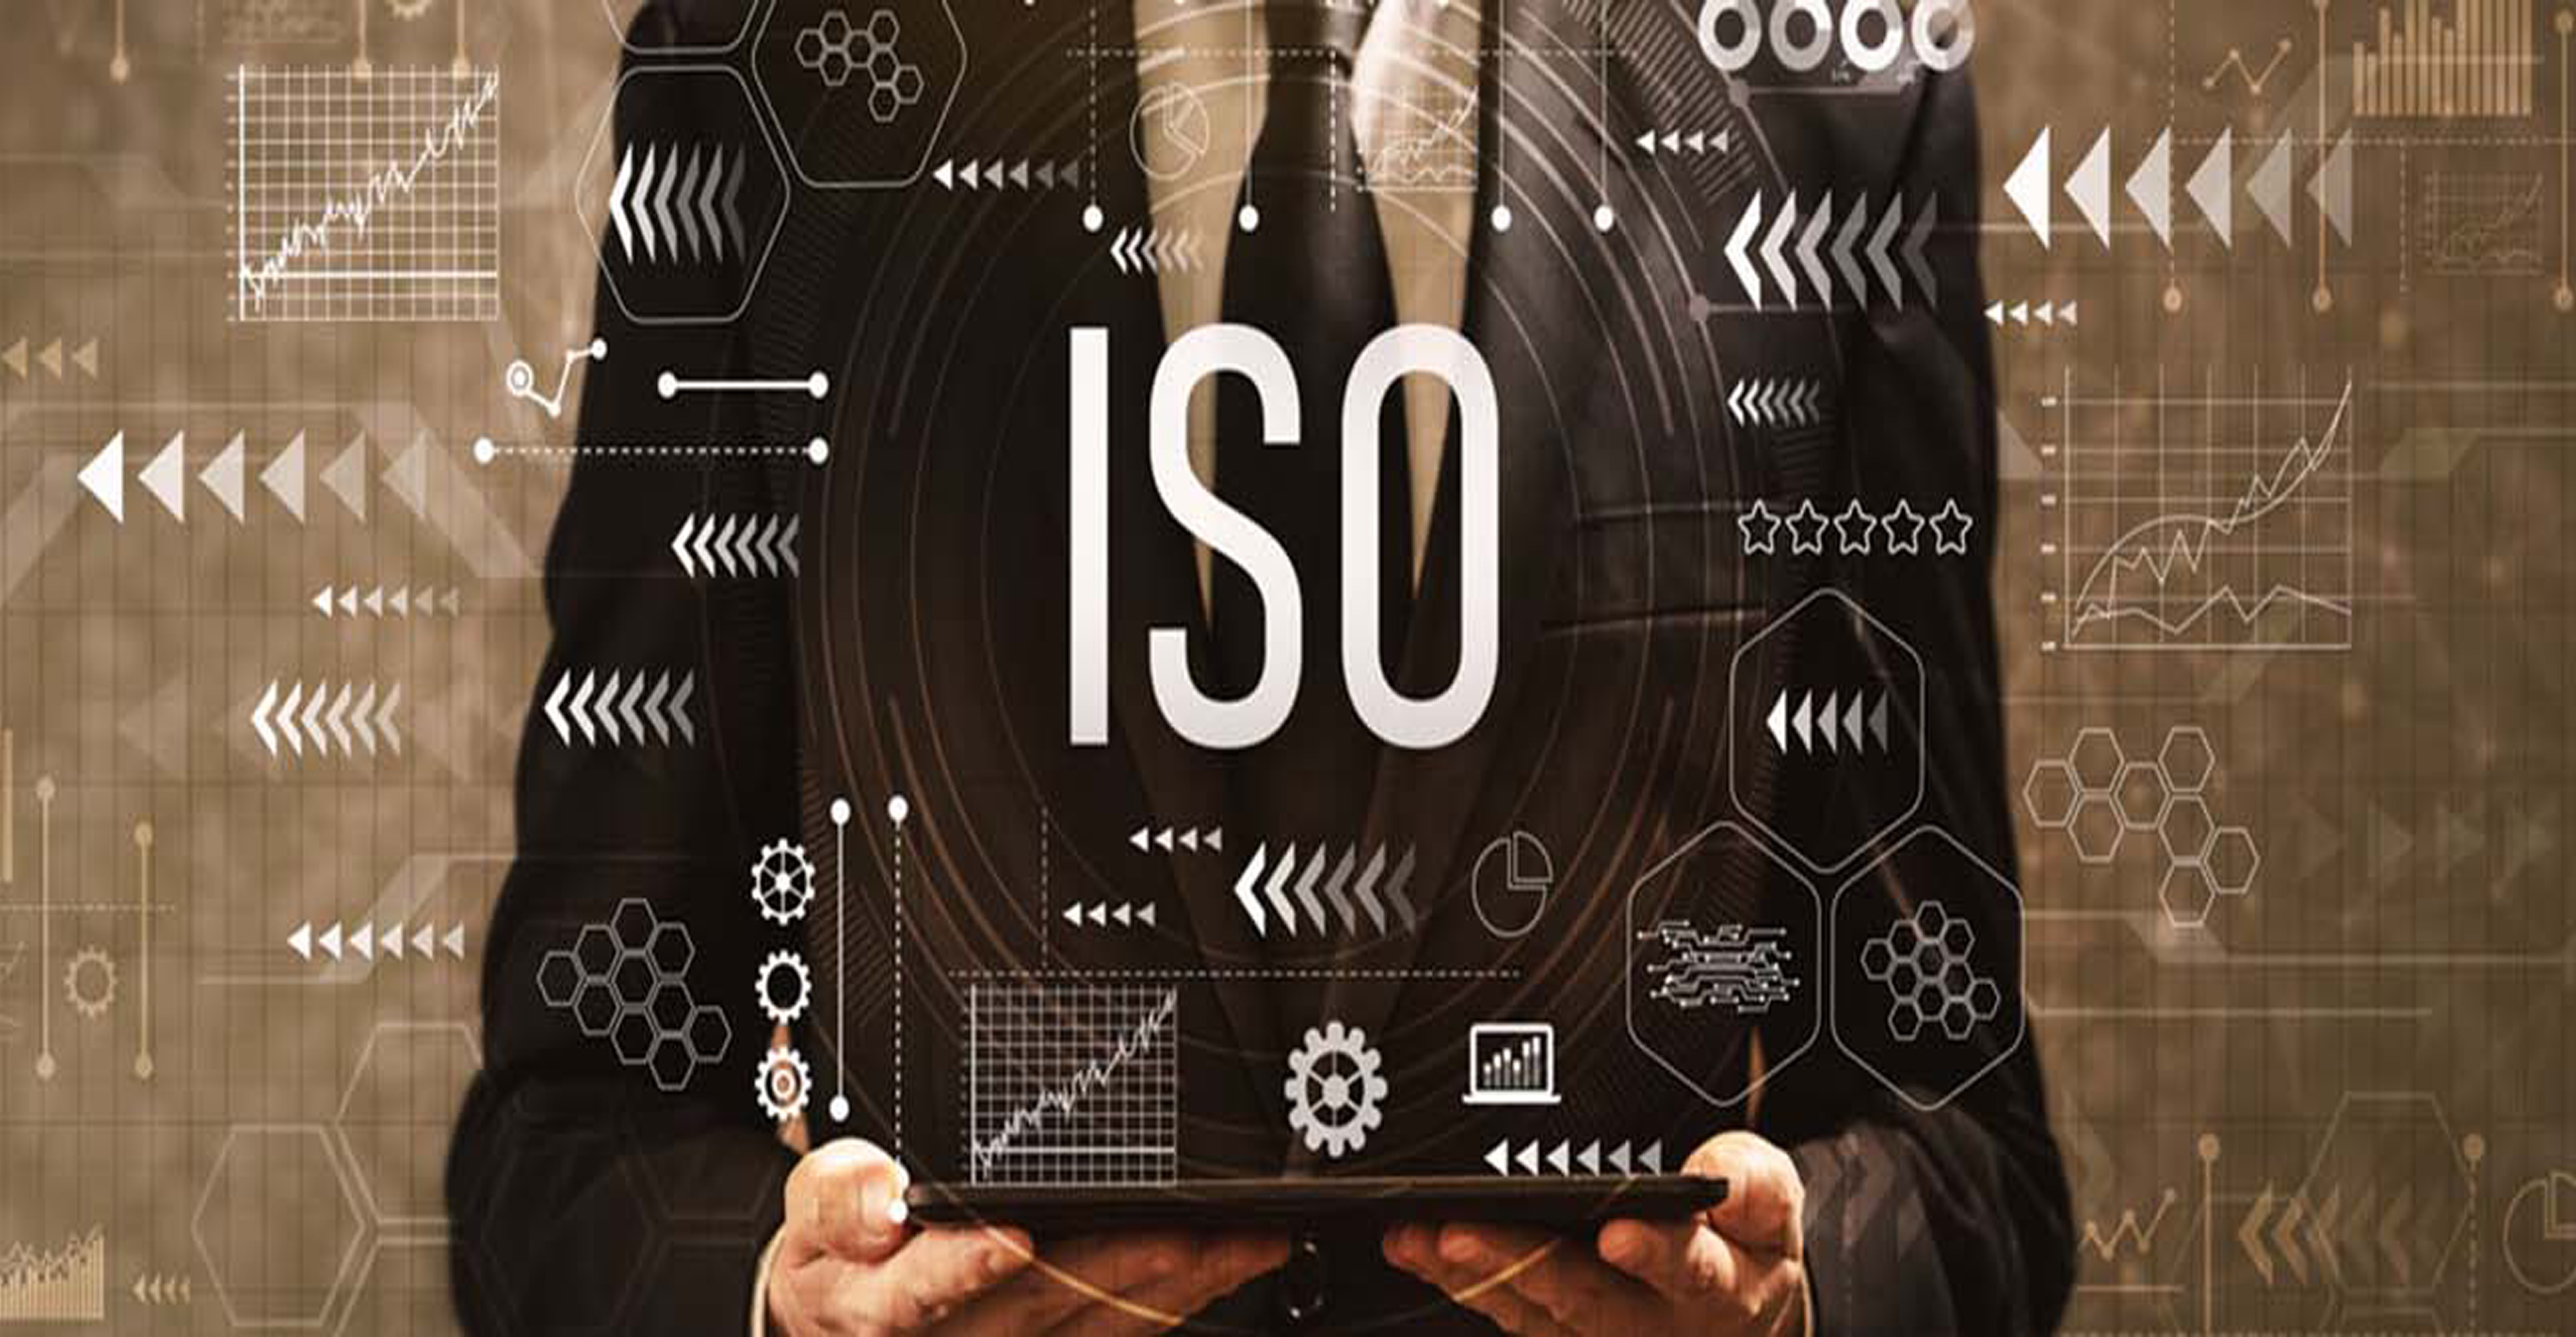 ISO Consultation Service